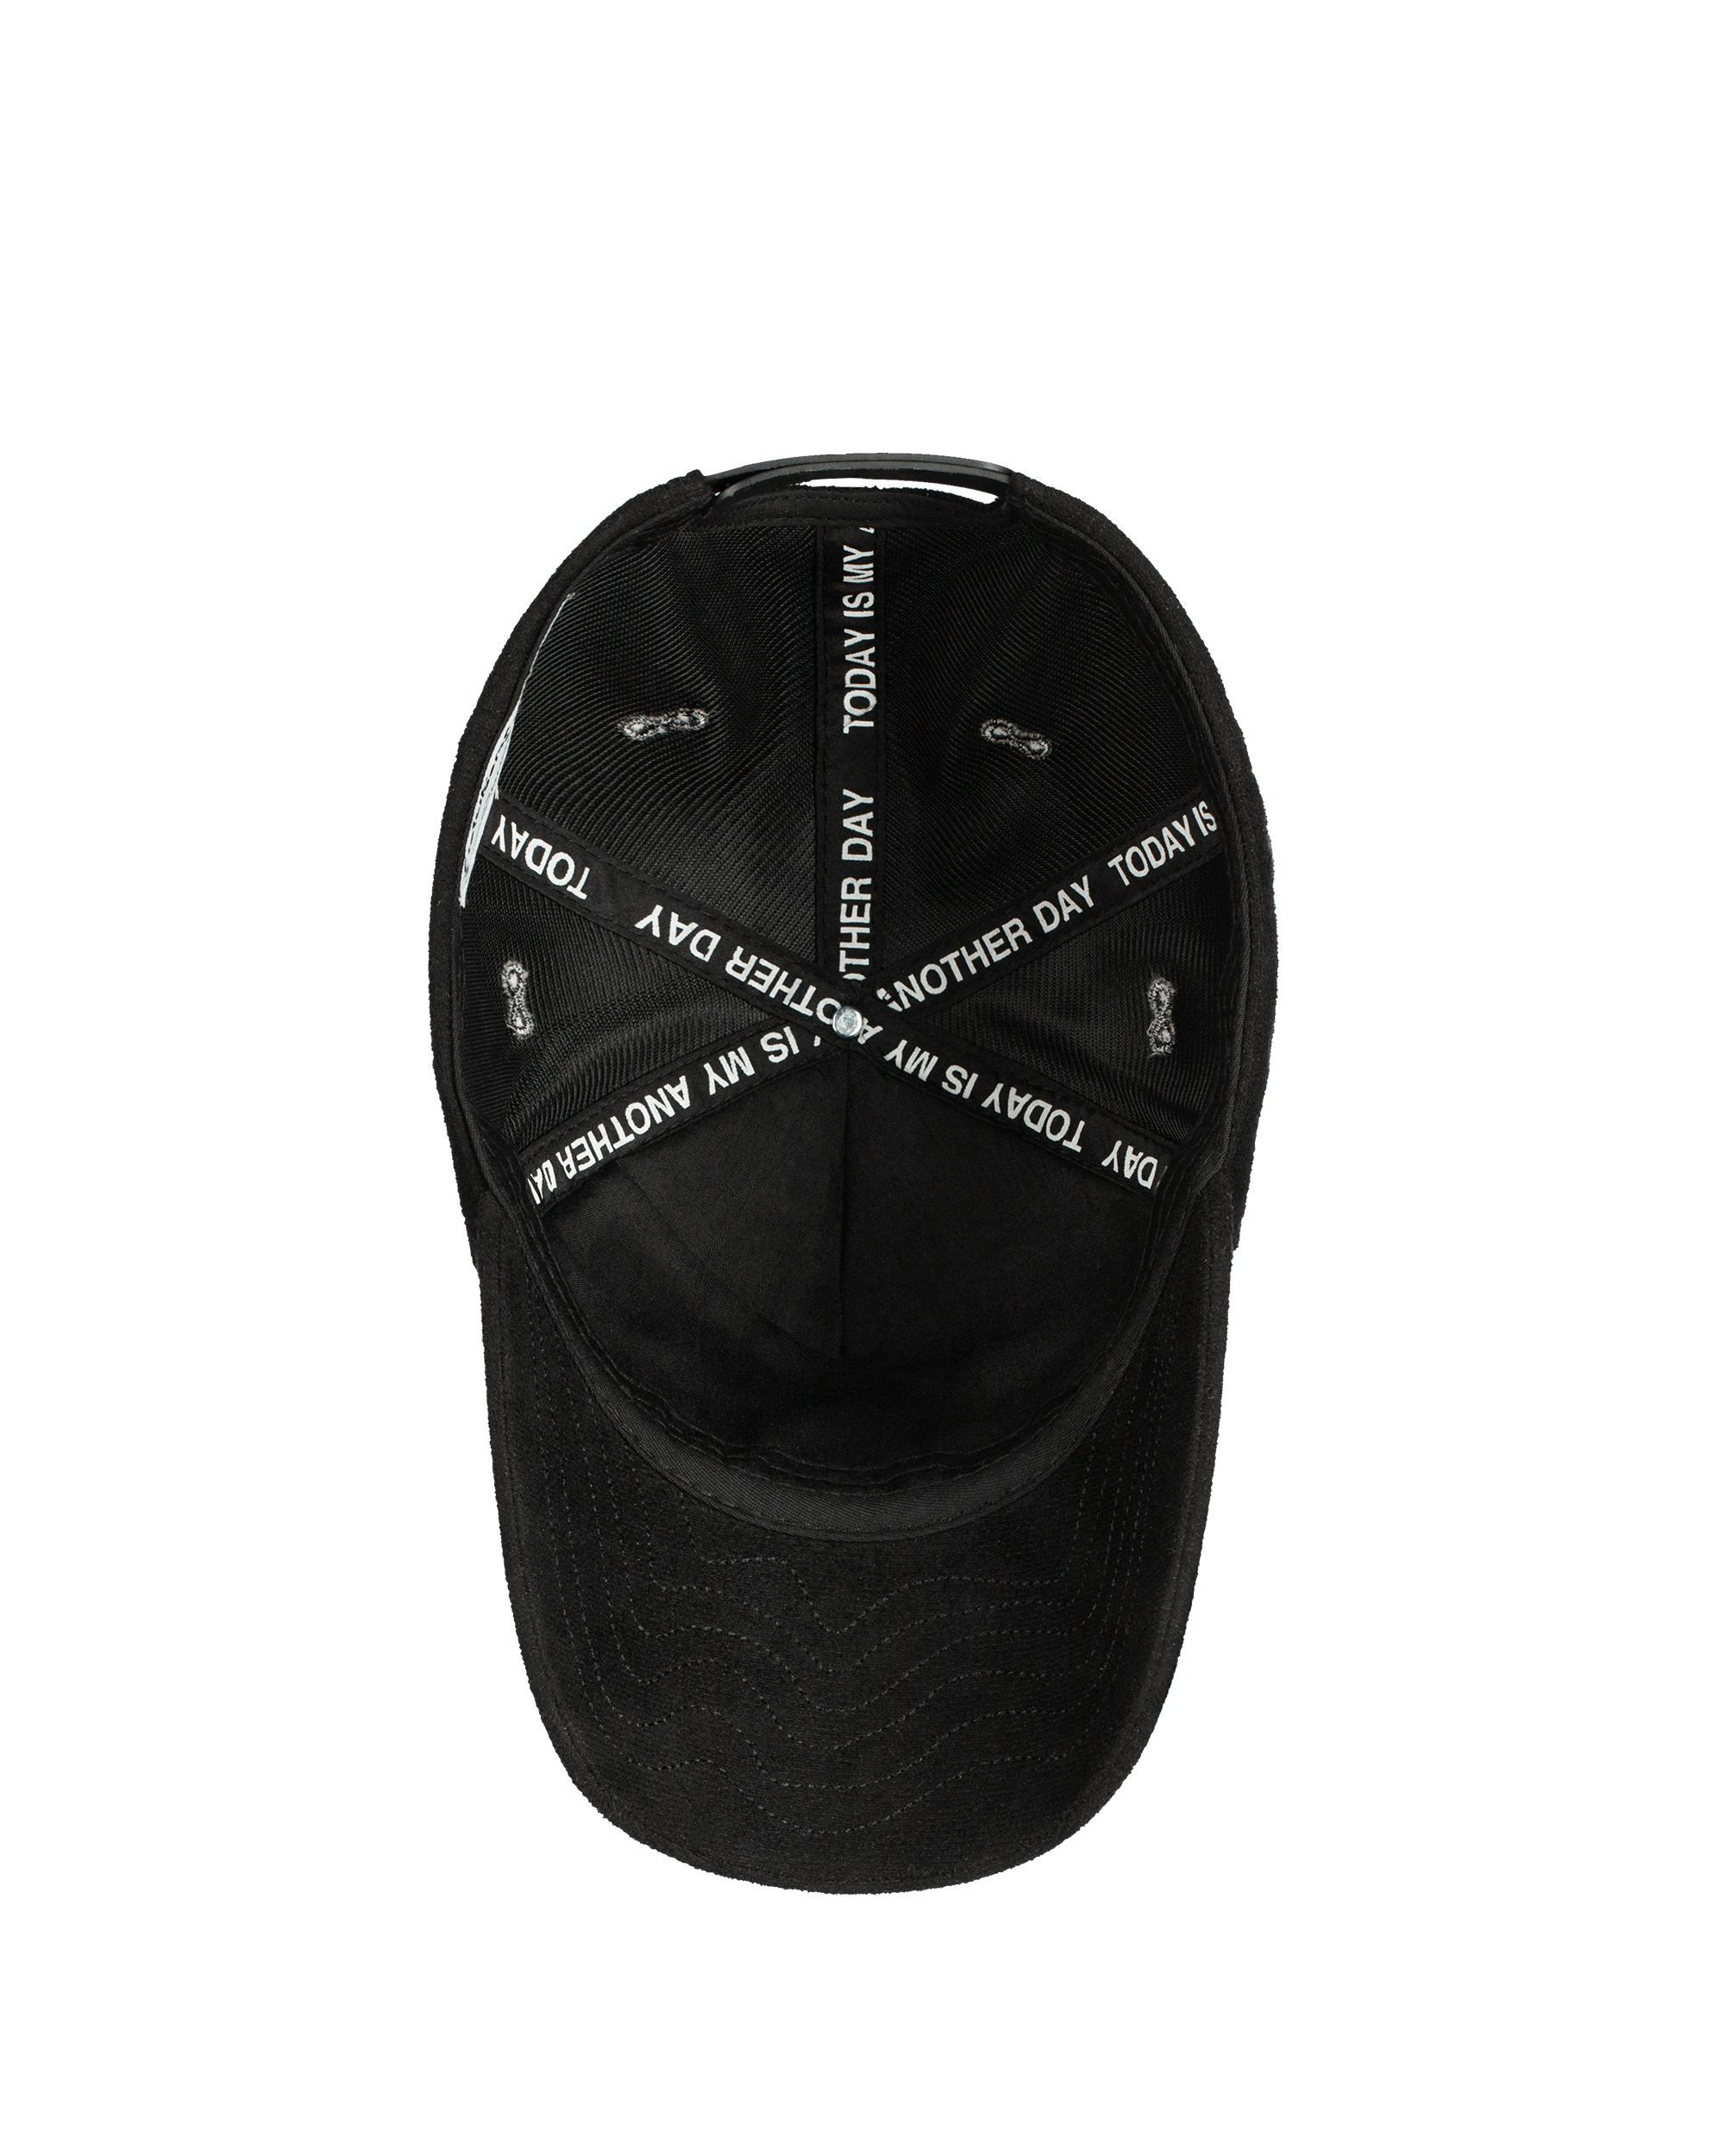 'WAV' suede cap, black